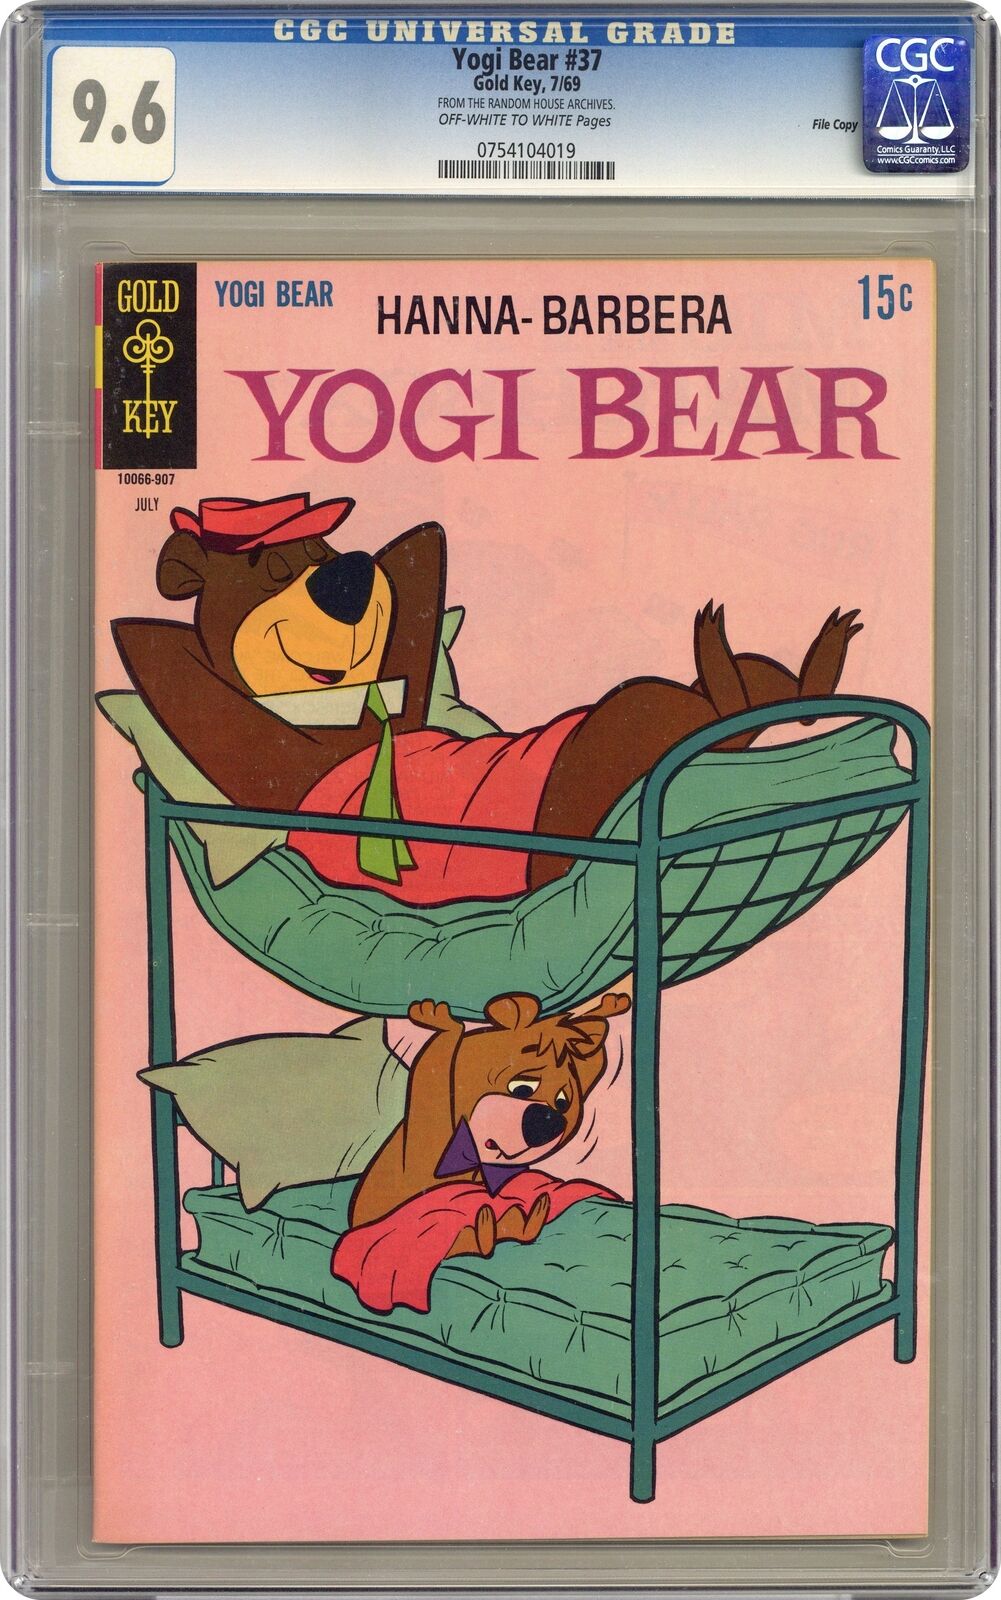 Yogi Bear #37 CGC 9.6 1969 0754104019